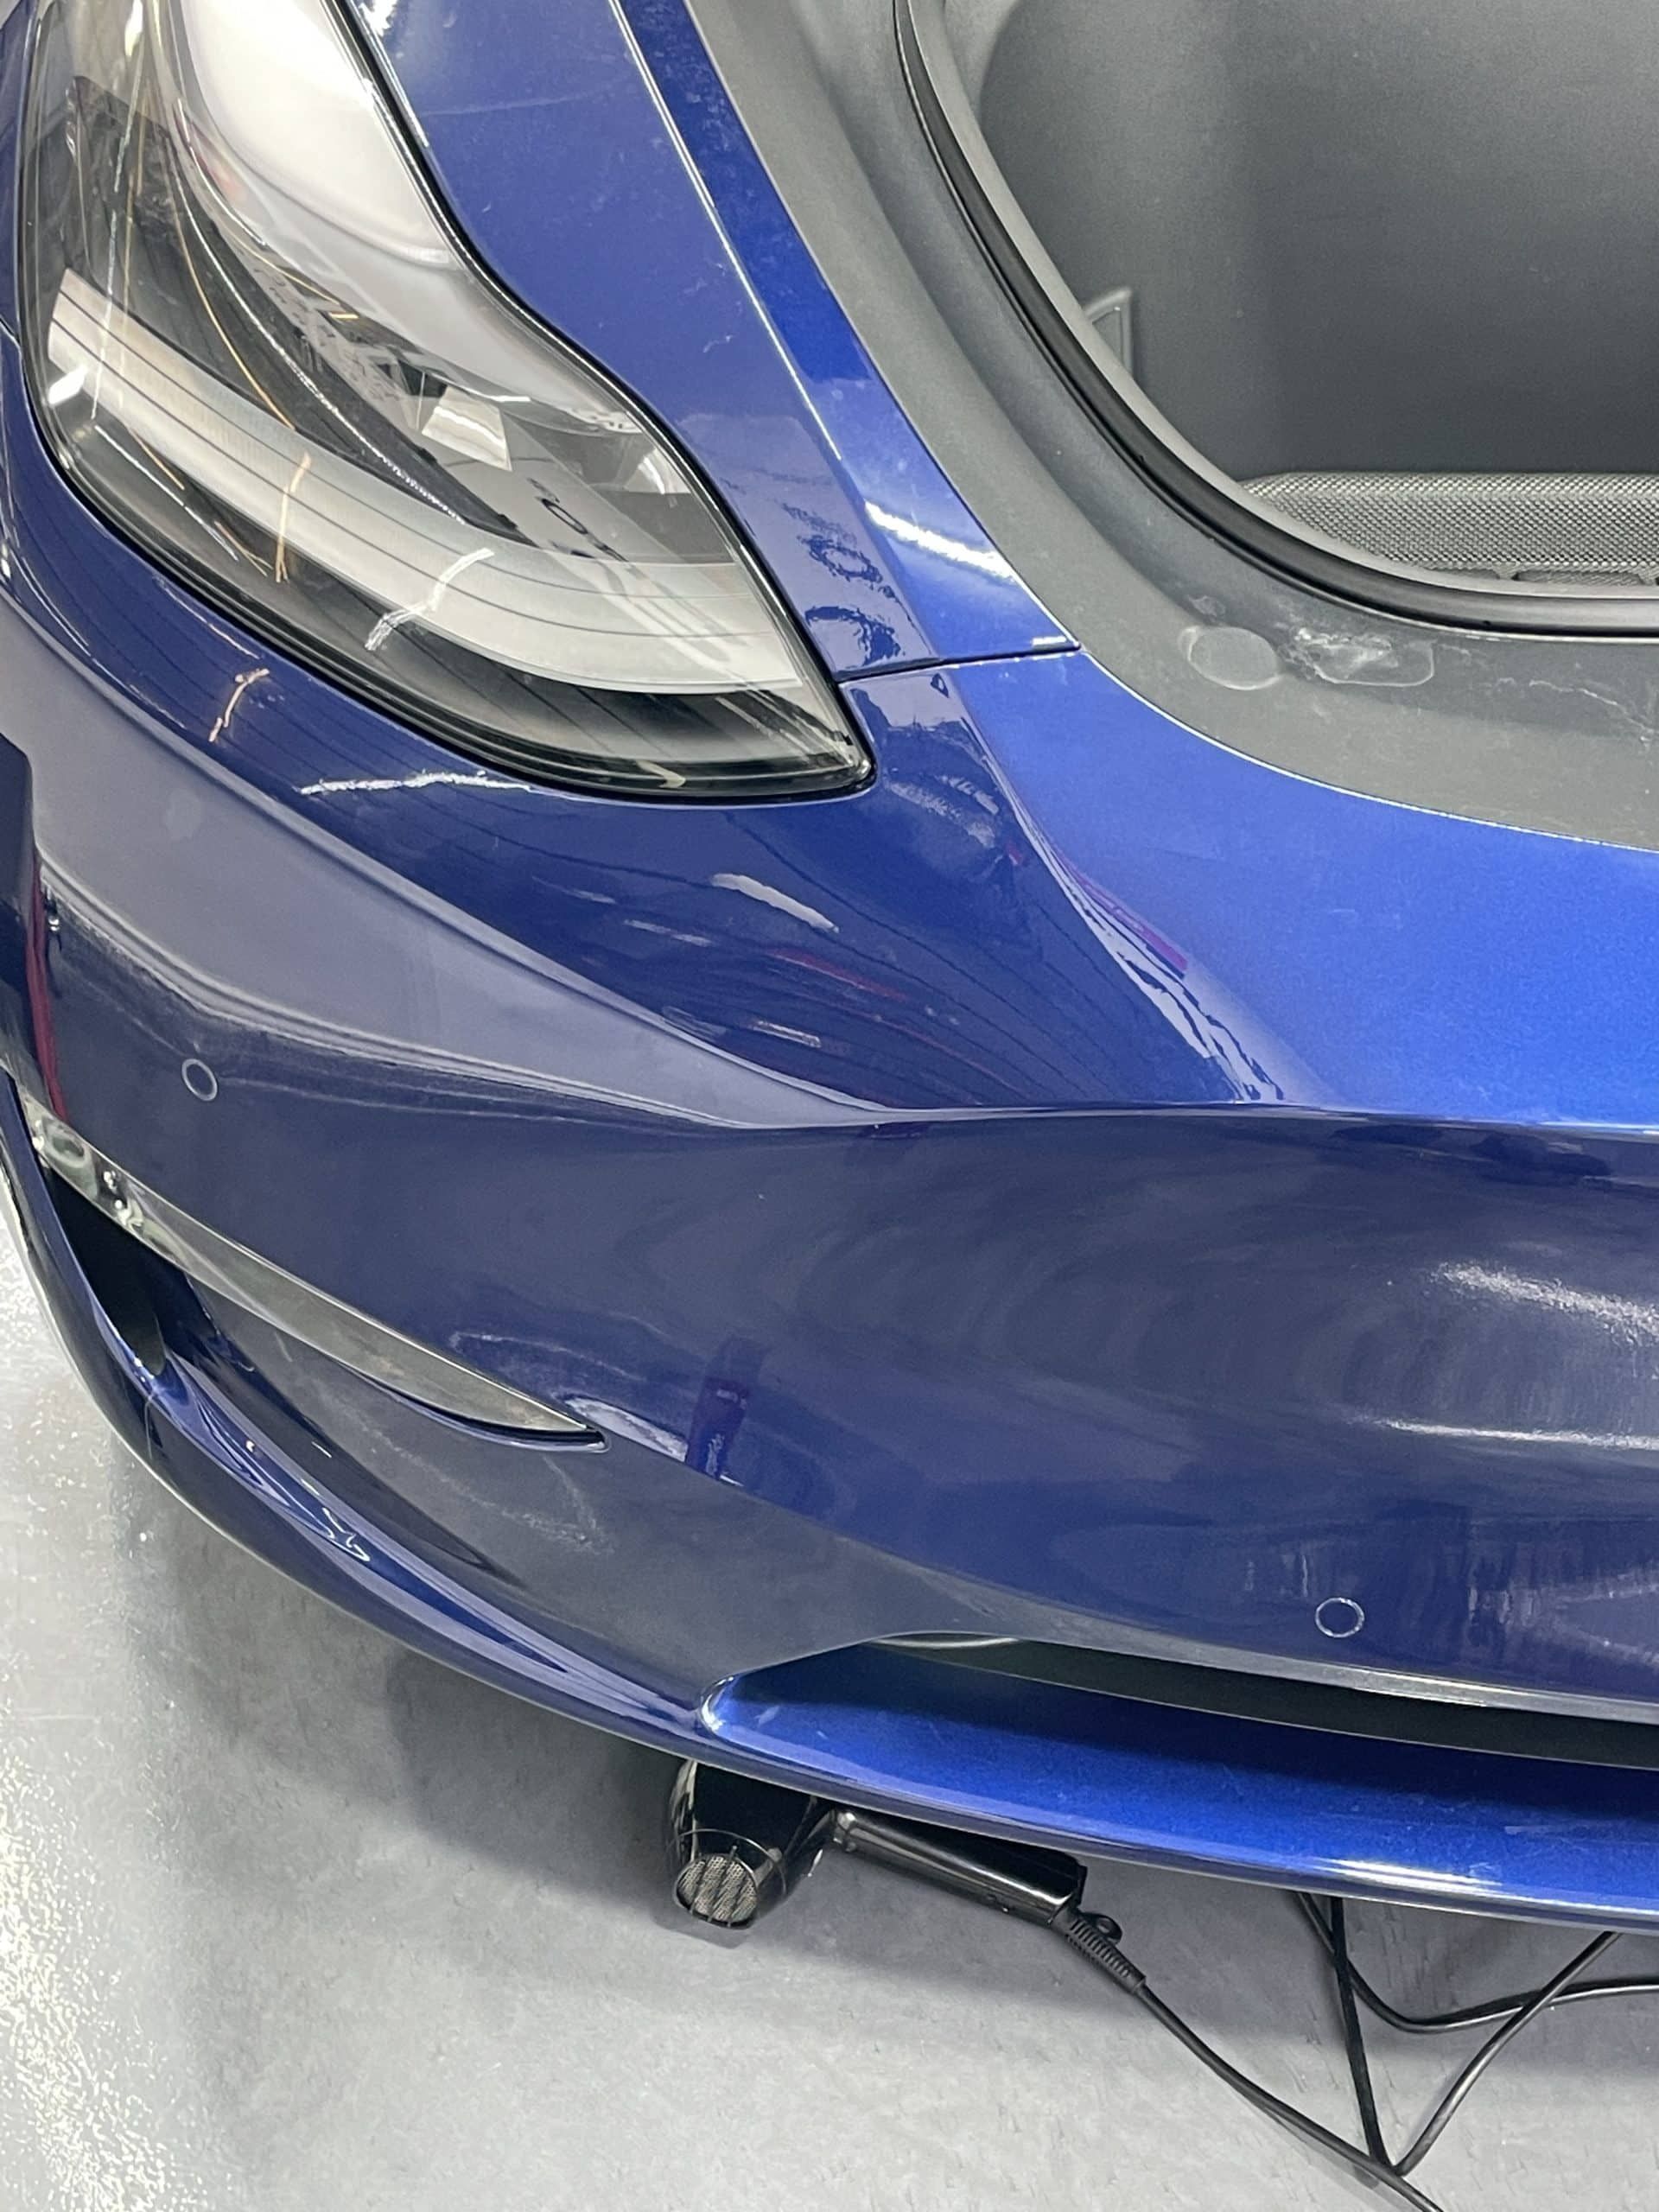 A blue tesla model 3 is parked in a garage